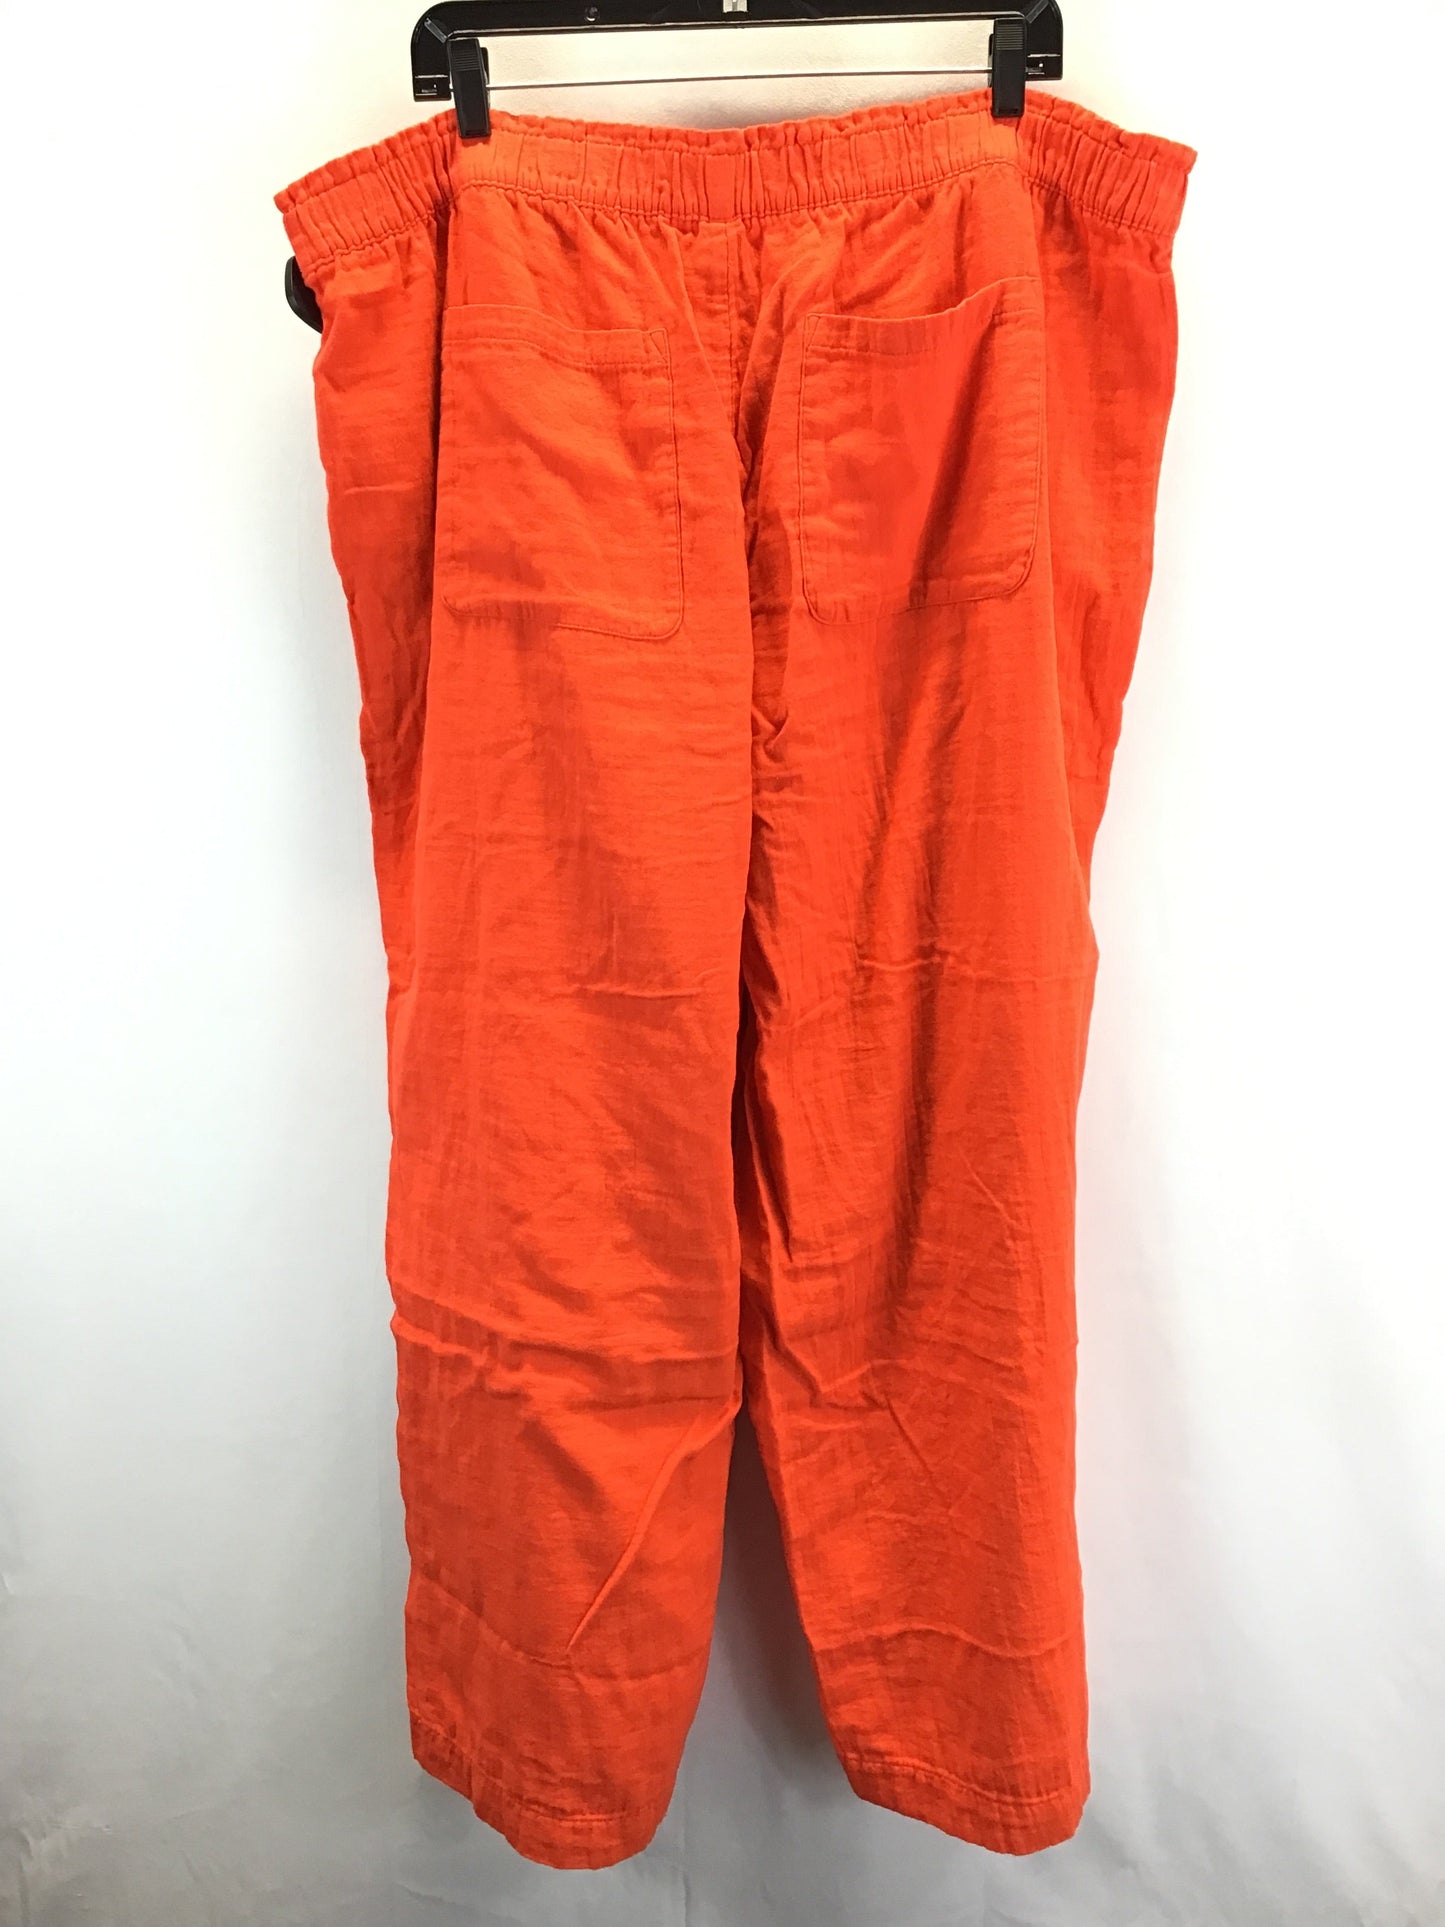 Orange Pants Lounge Old Navy, Size Xxl